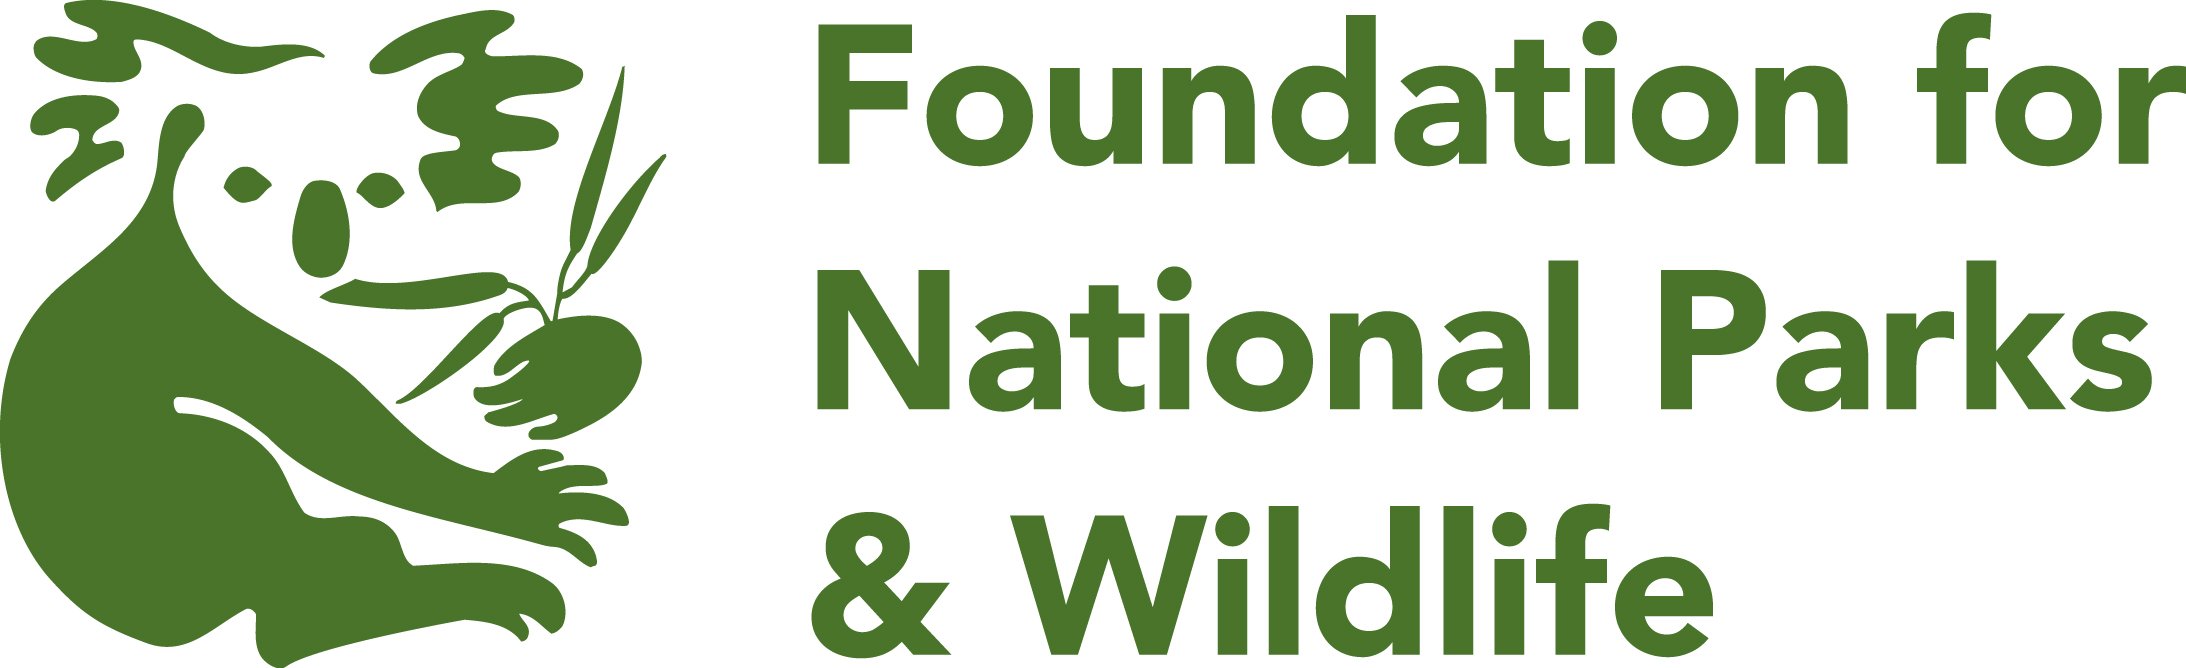 Foundation for National Parks & Wildlife (Copy)